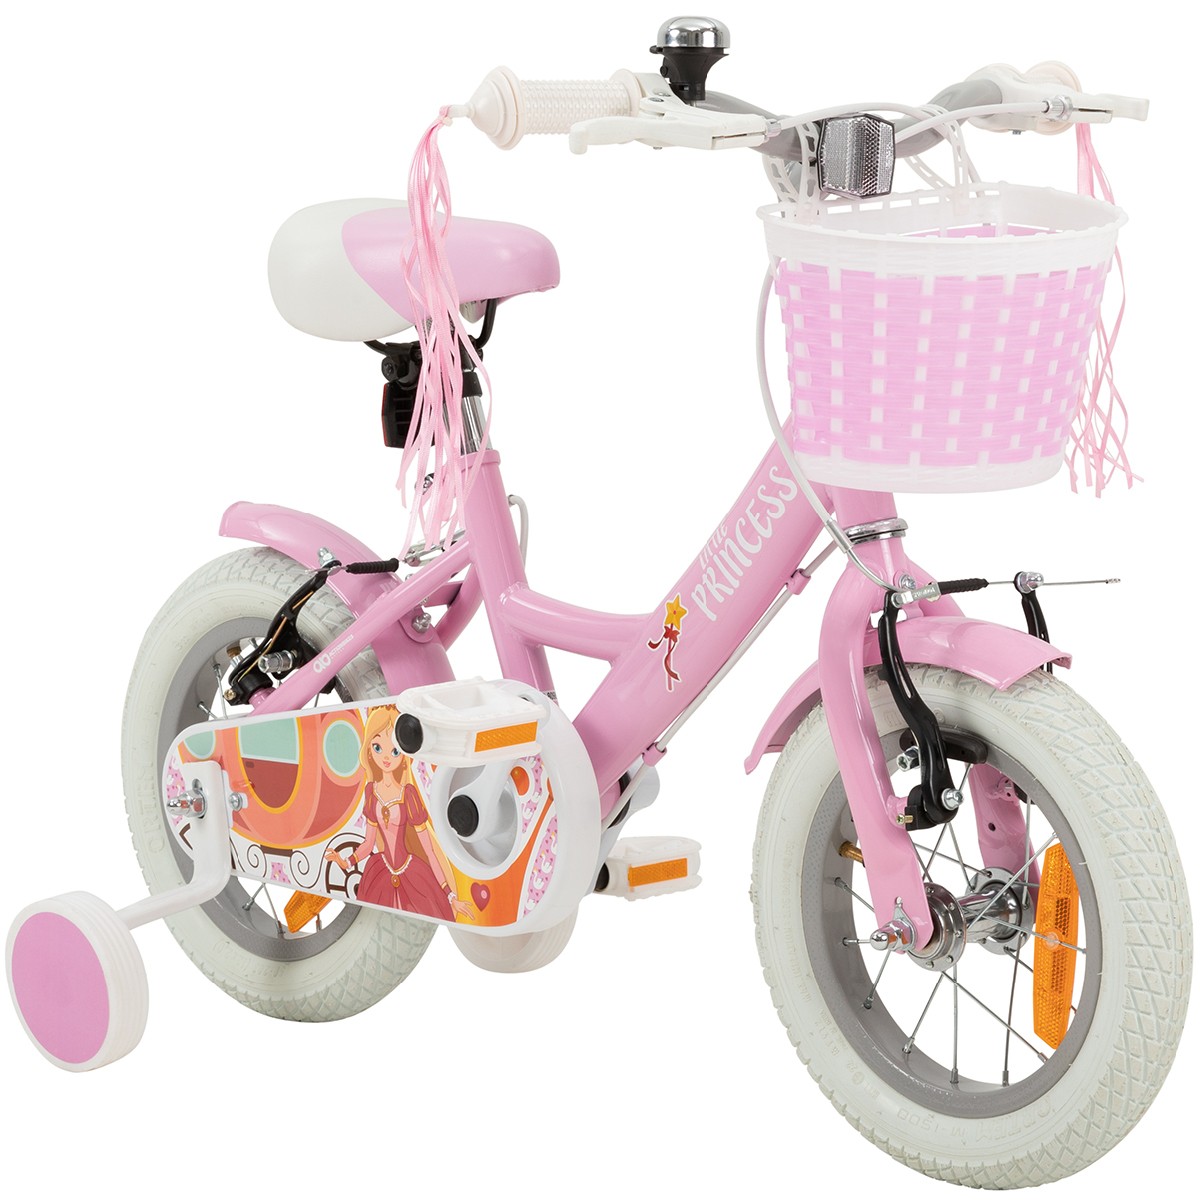 01-kinderfahrrad-12-zoll-pink-actionbikes-motors-princess-start